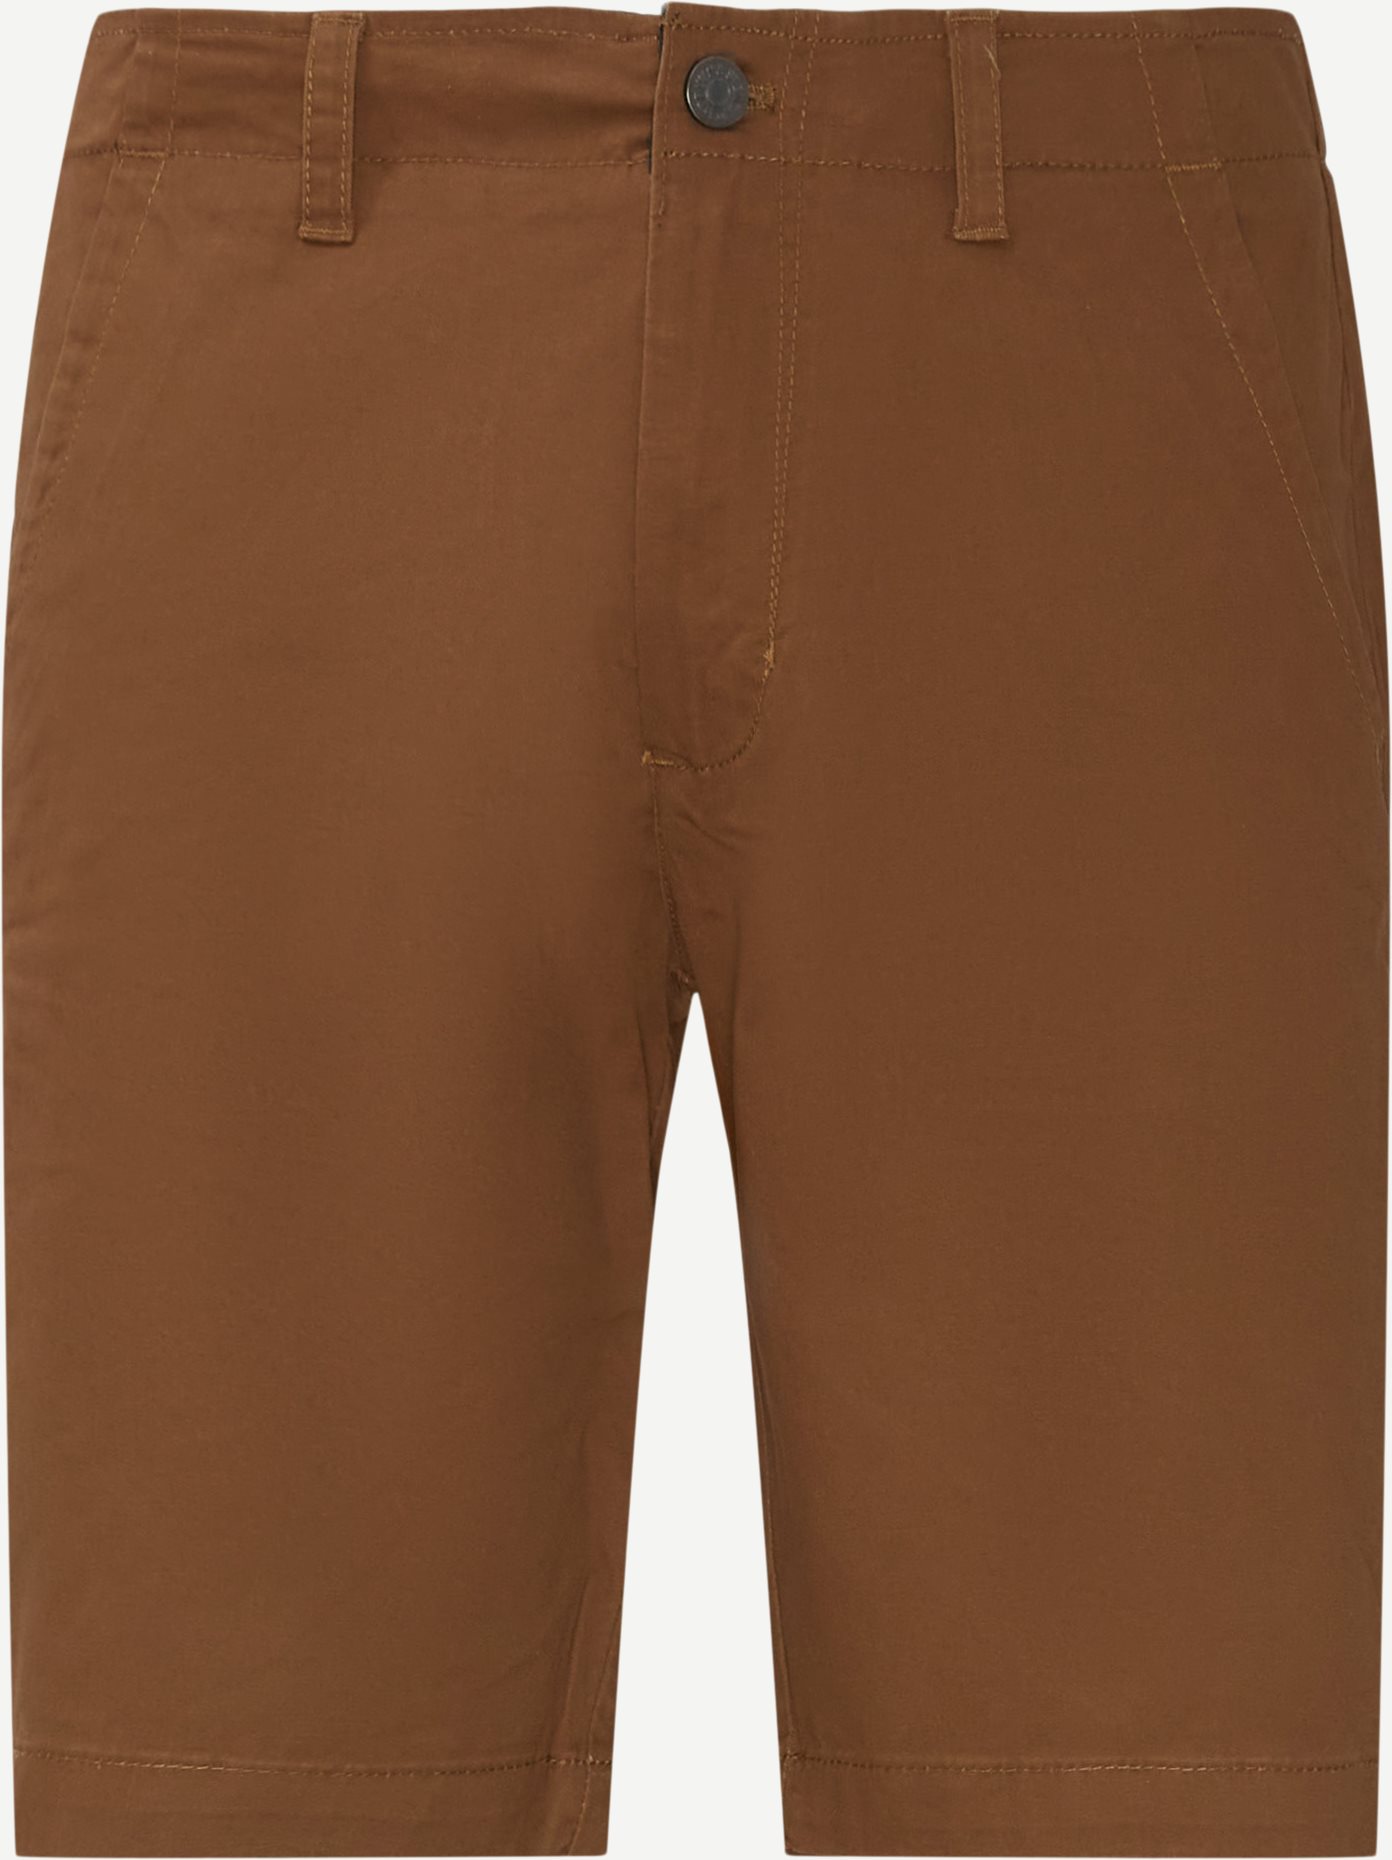 Shorts - Regular fit - Brun